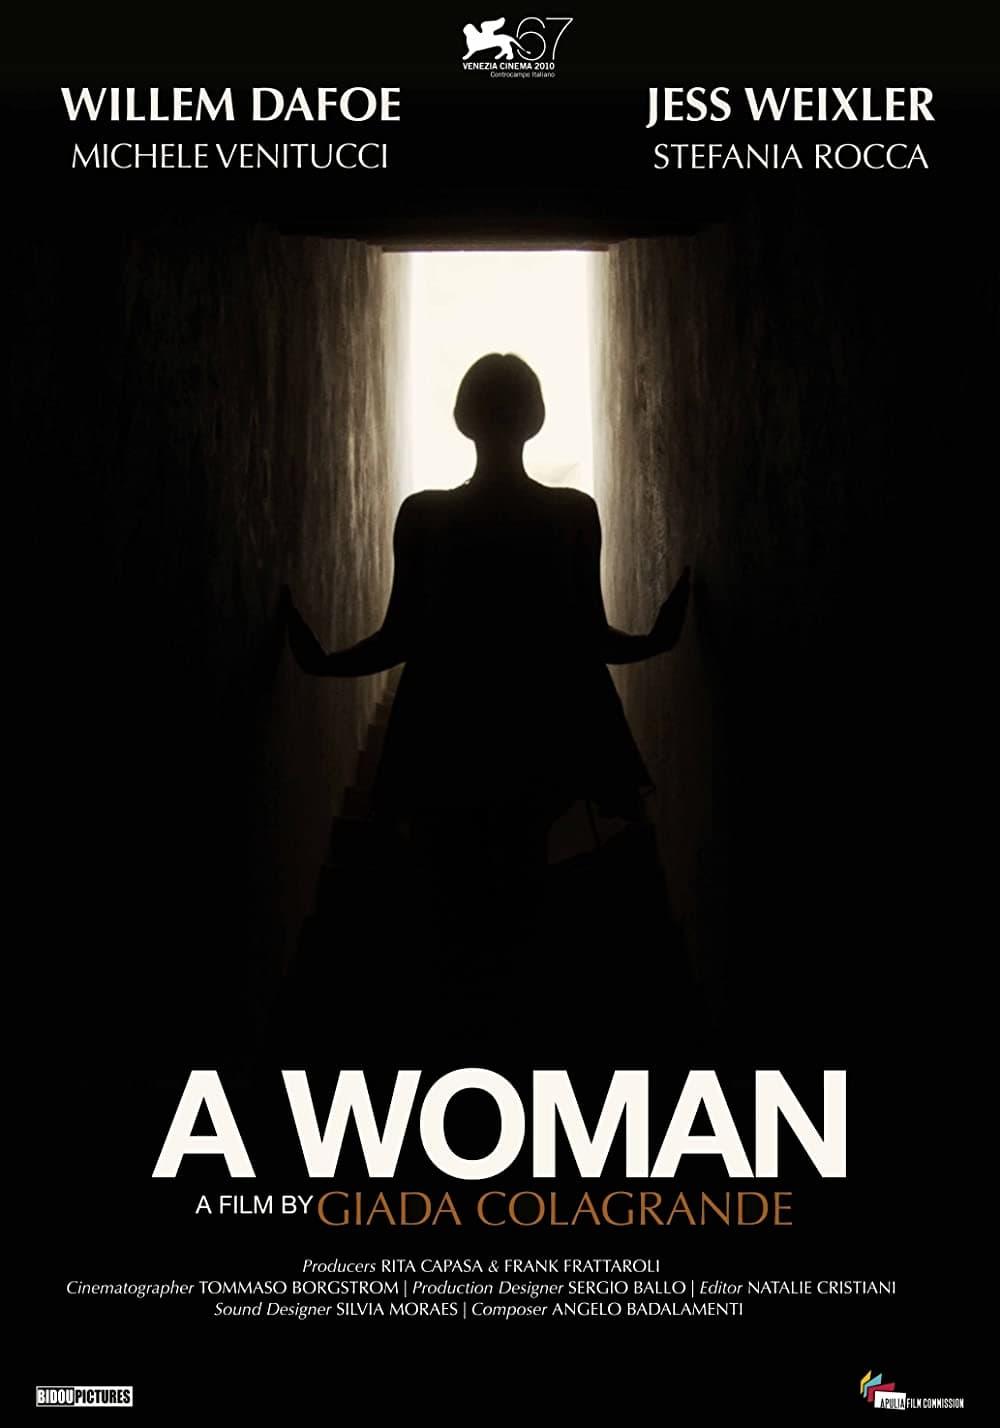 A Woman poster